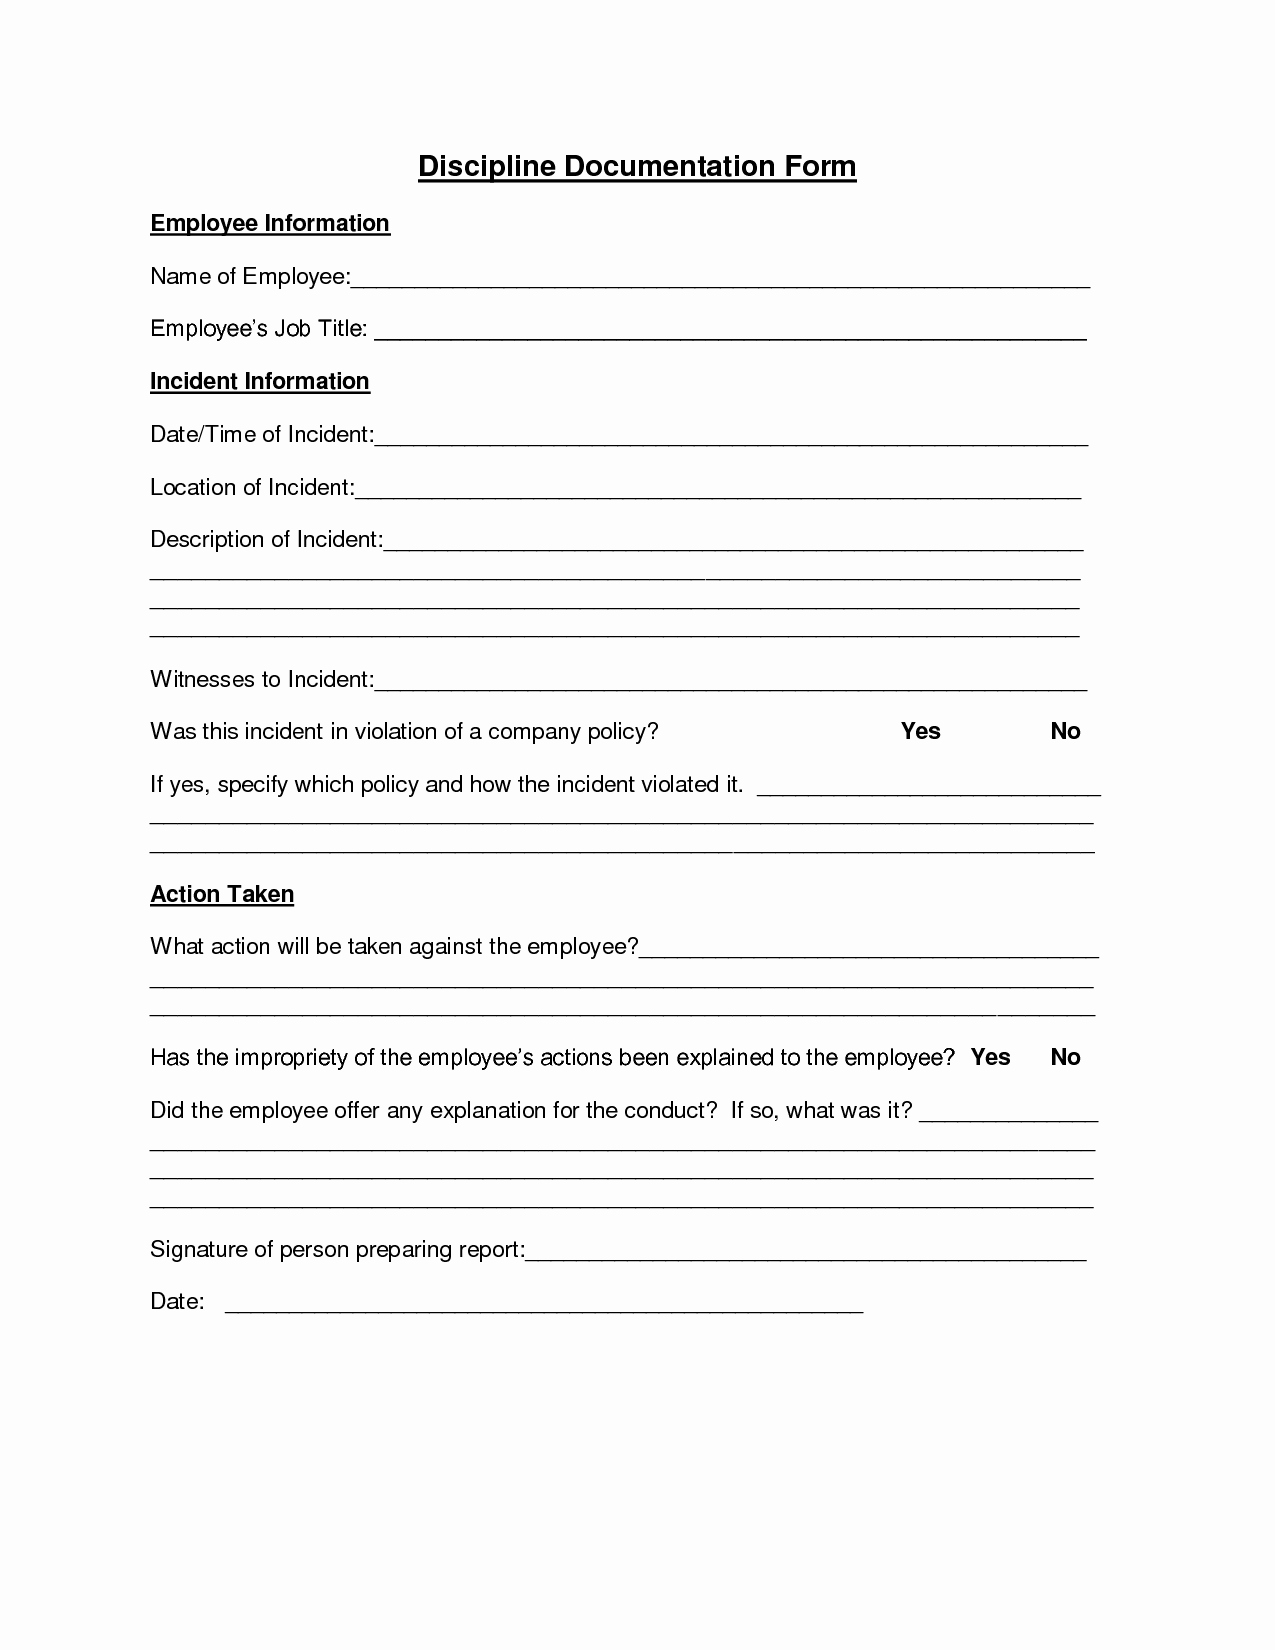 Free Employee Evaluation forms Printable Unique Employee Discipline form Employee forms